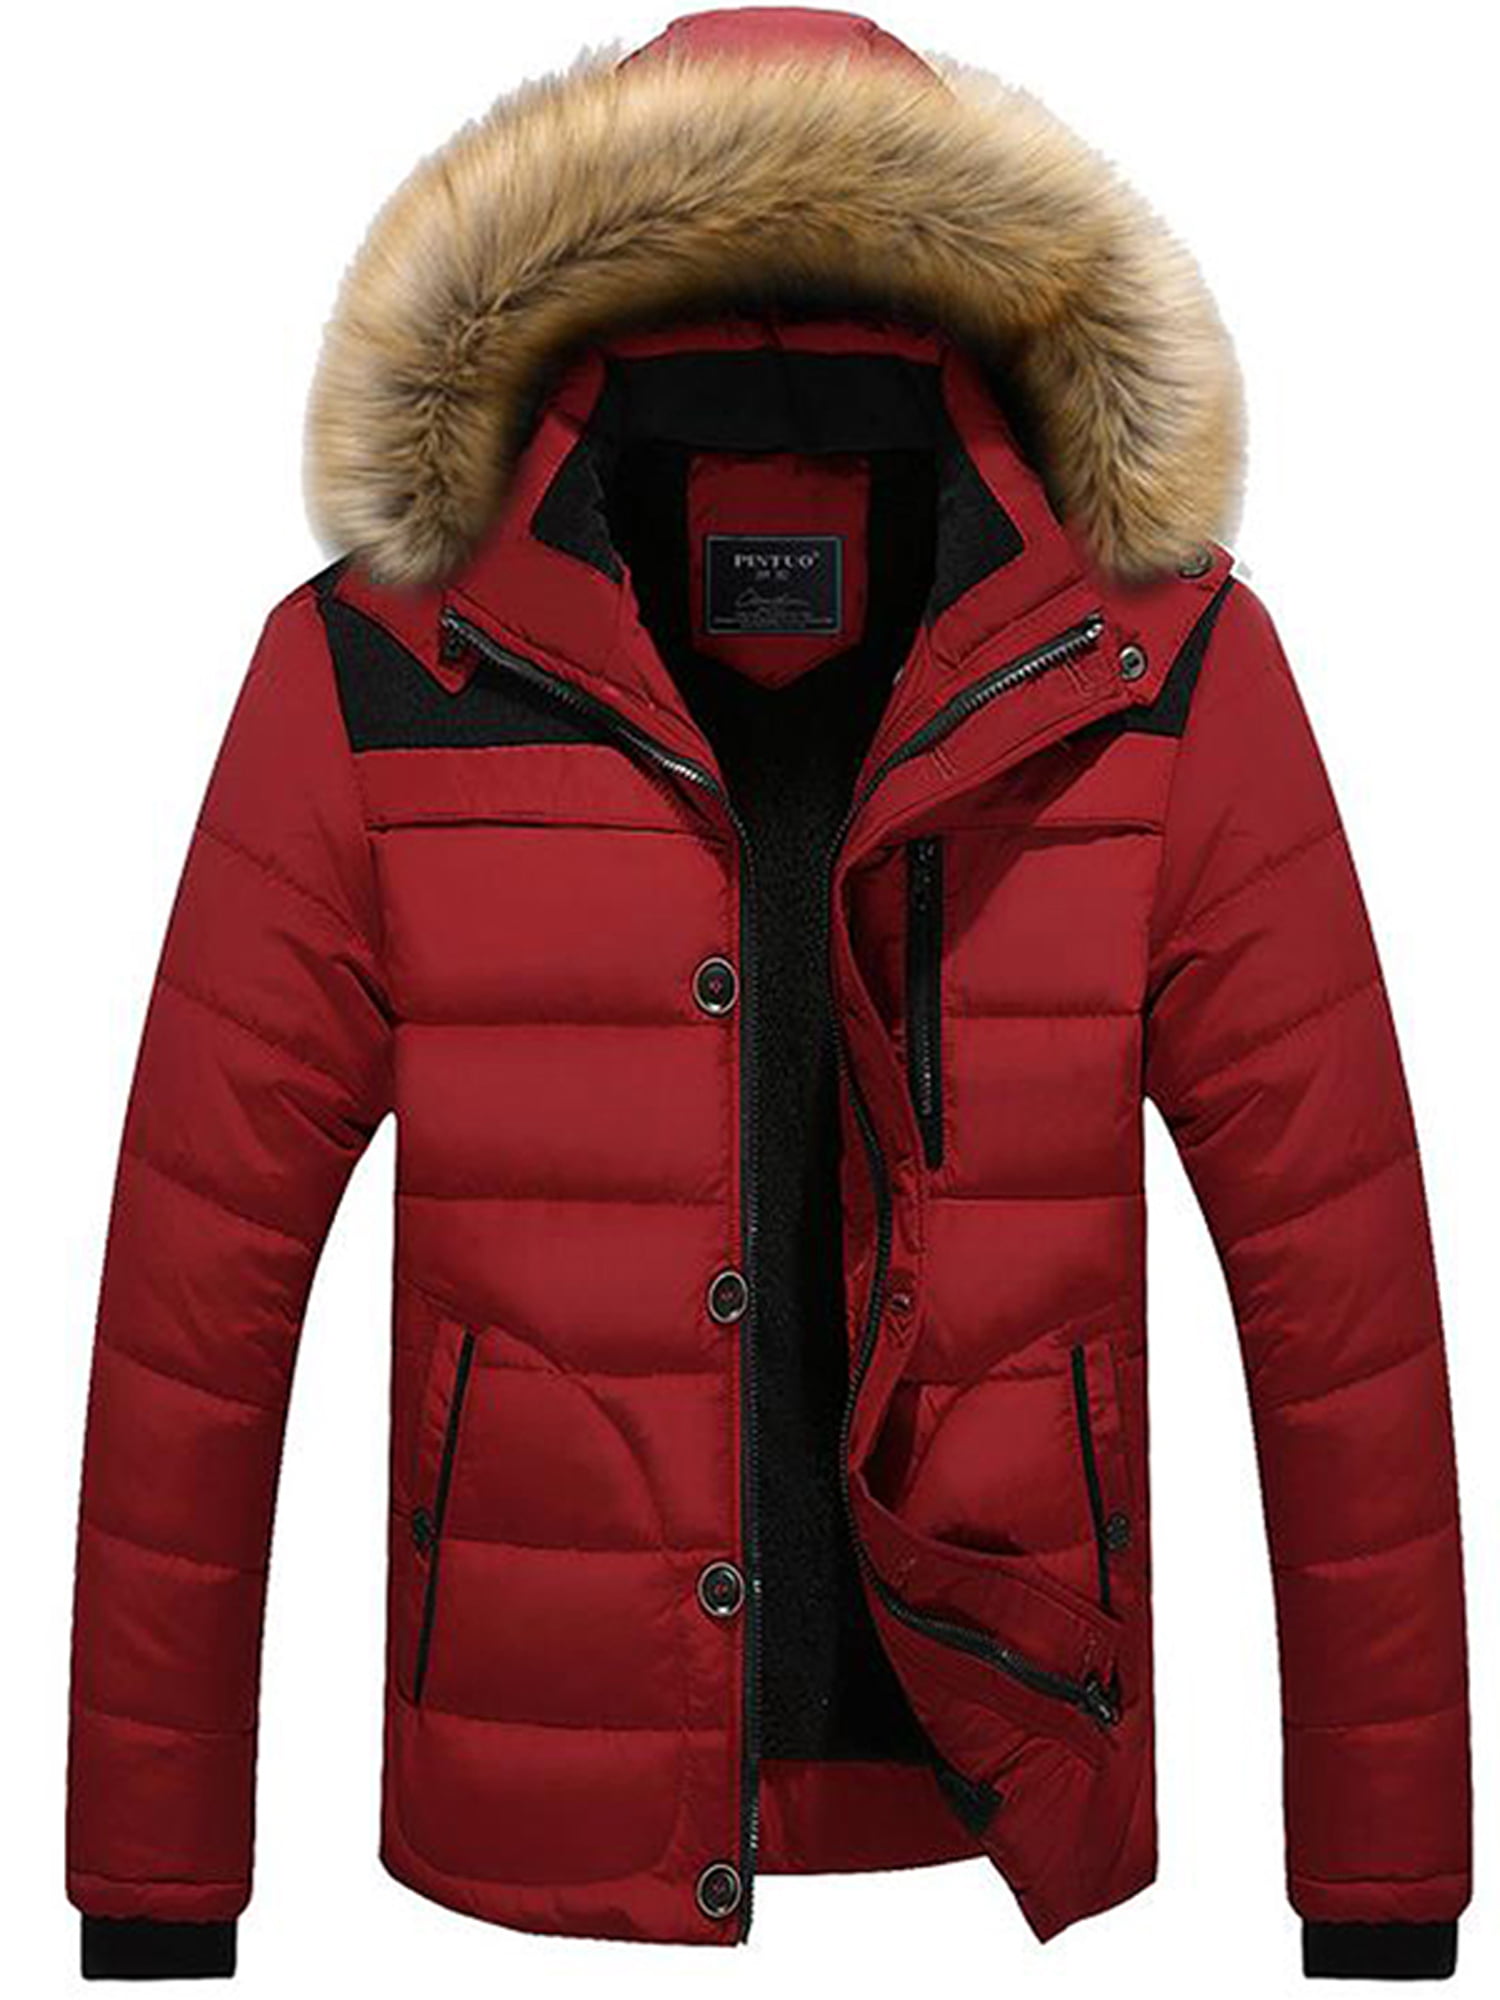 Winter Men's down jacket coat thick warm hooded padded jacket fur outwear coats 